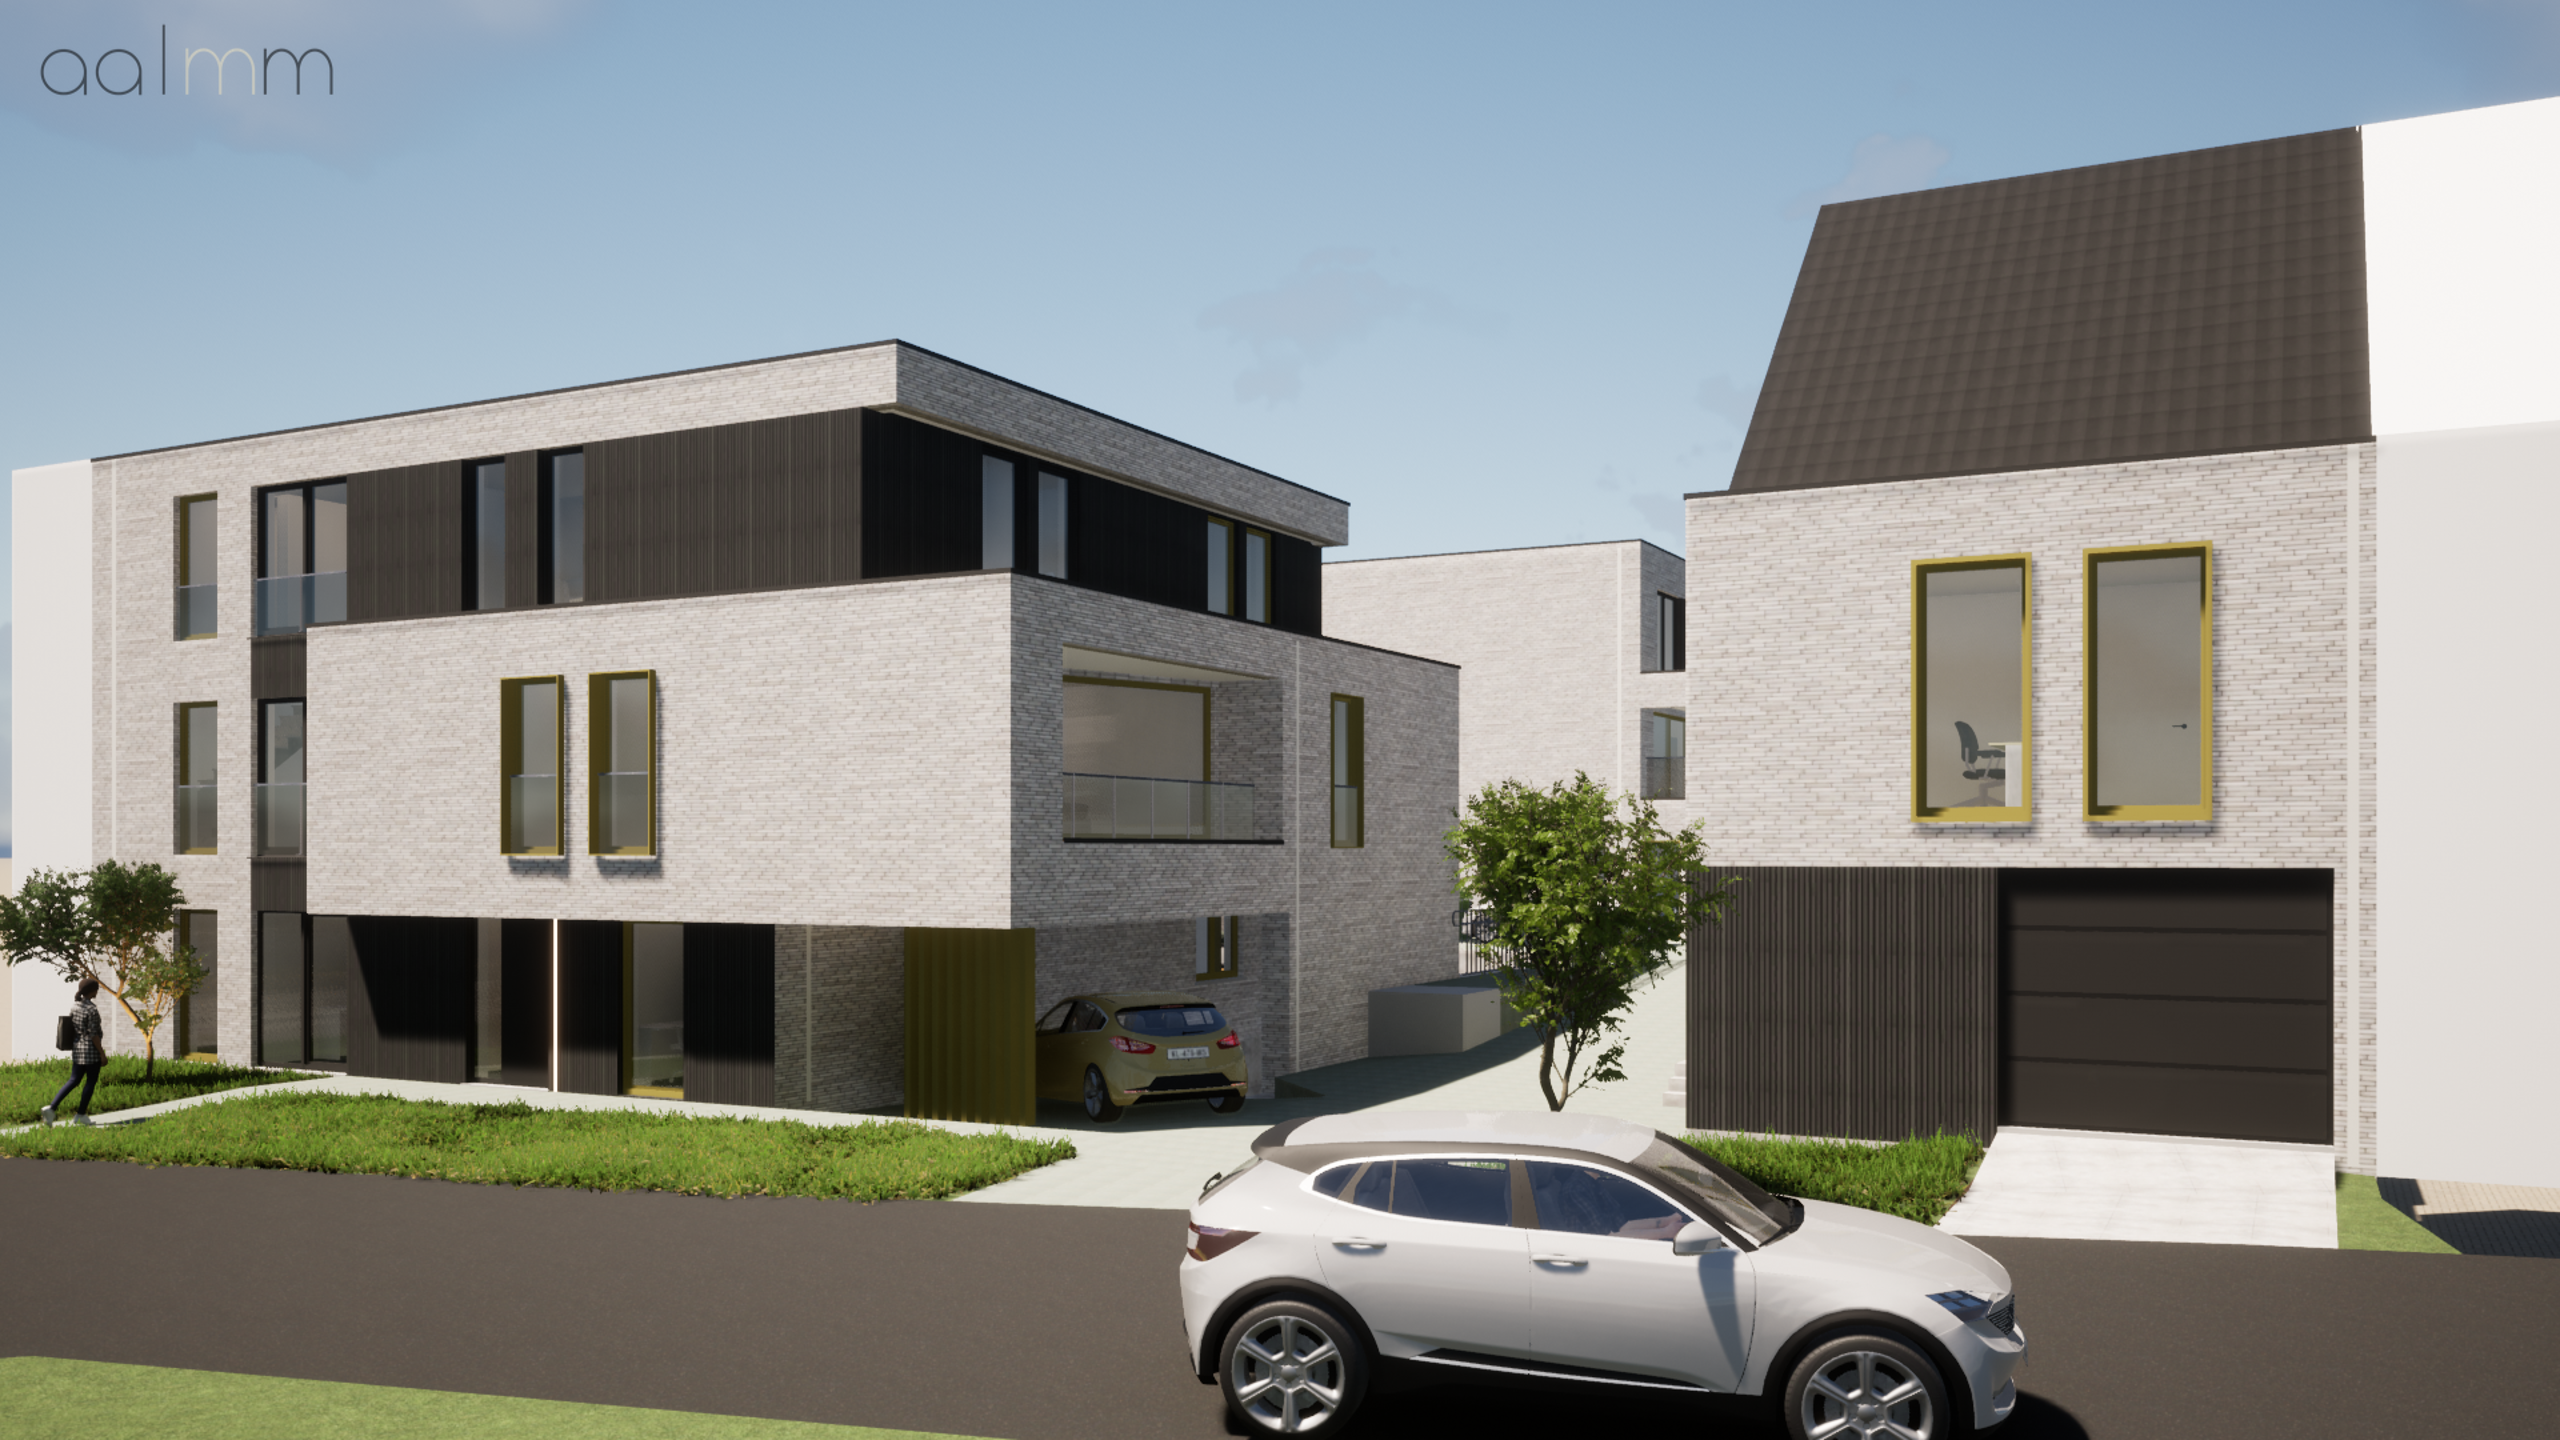 Duplex te  koop in Liedekerke 1770 393000.00€ 2 slaapkamers 120.60m² - Zoekertje 1376718